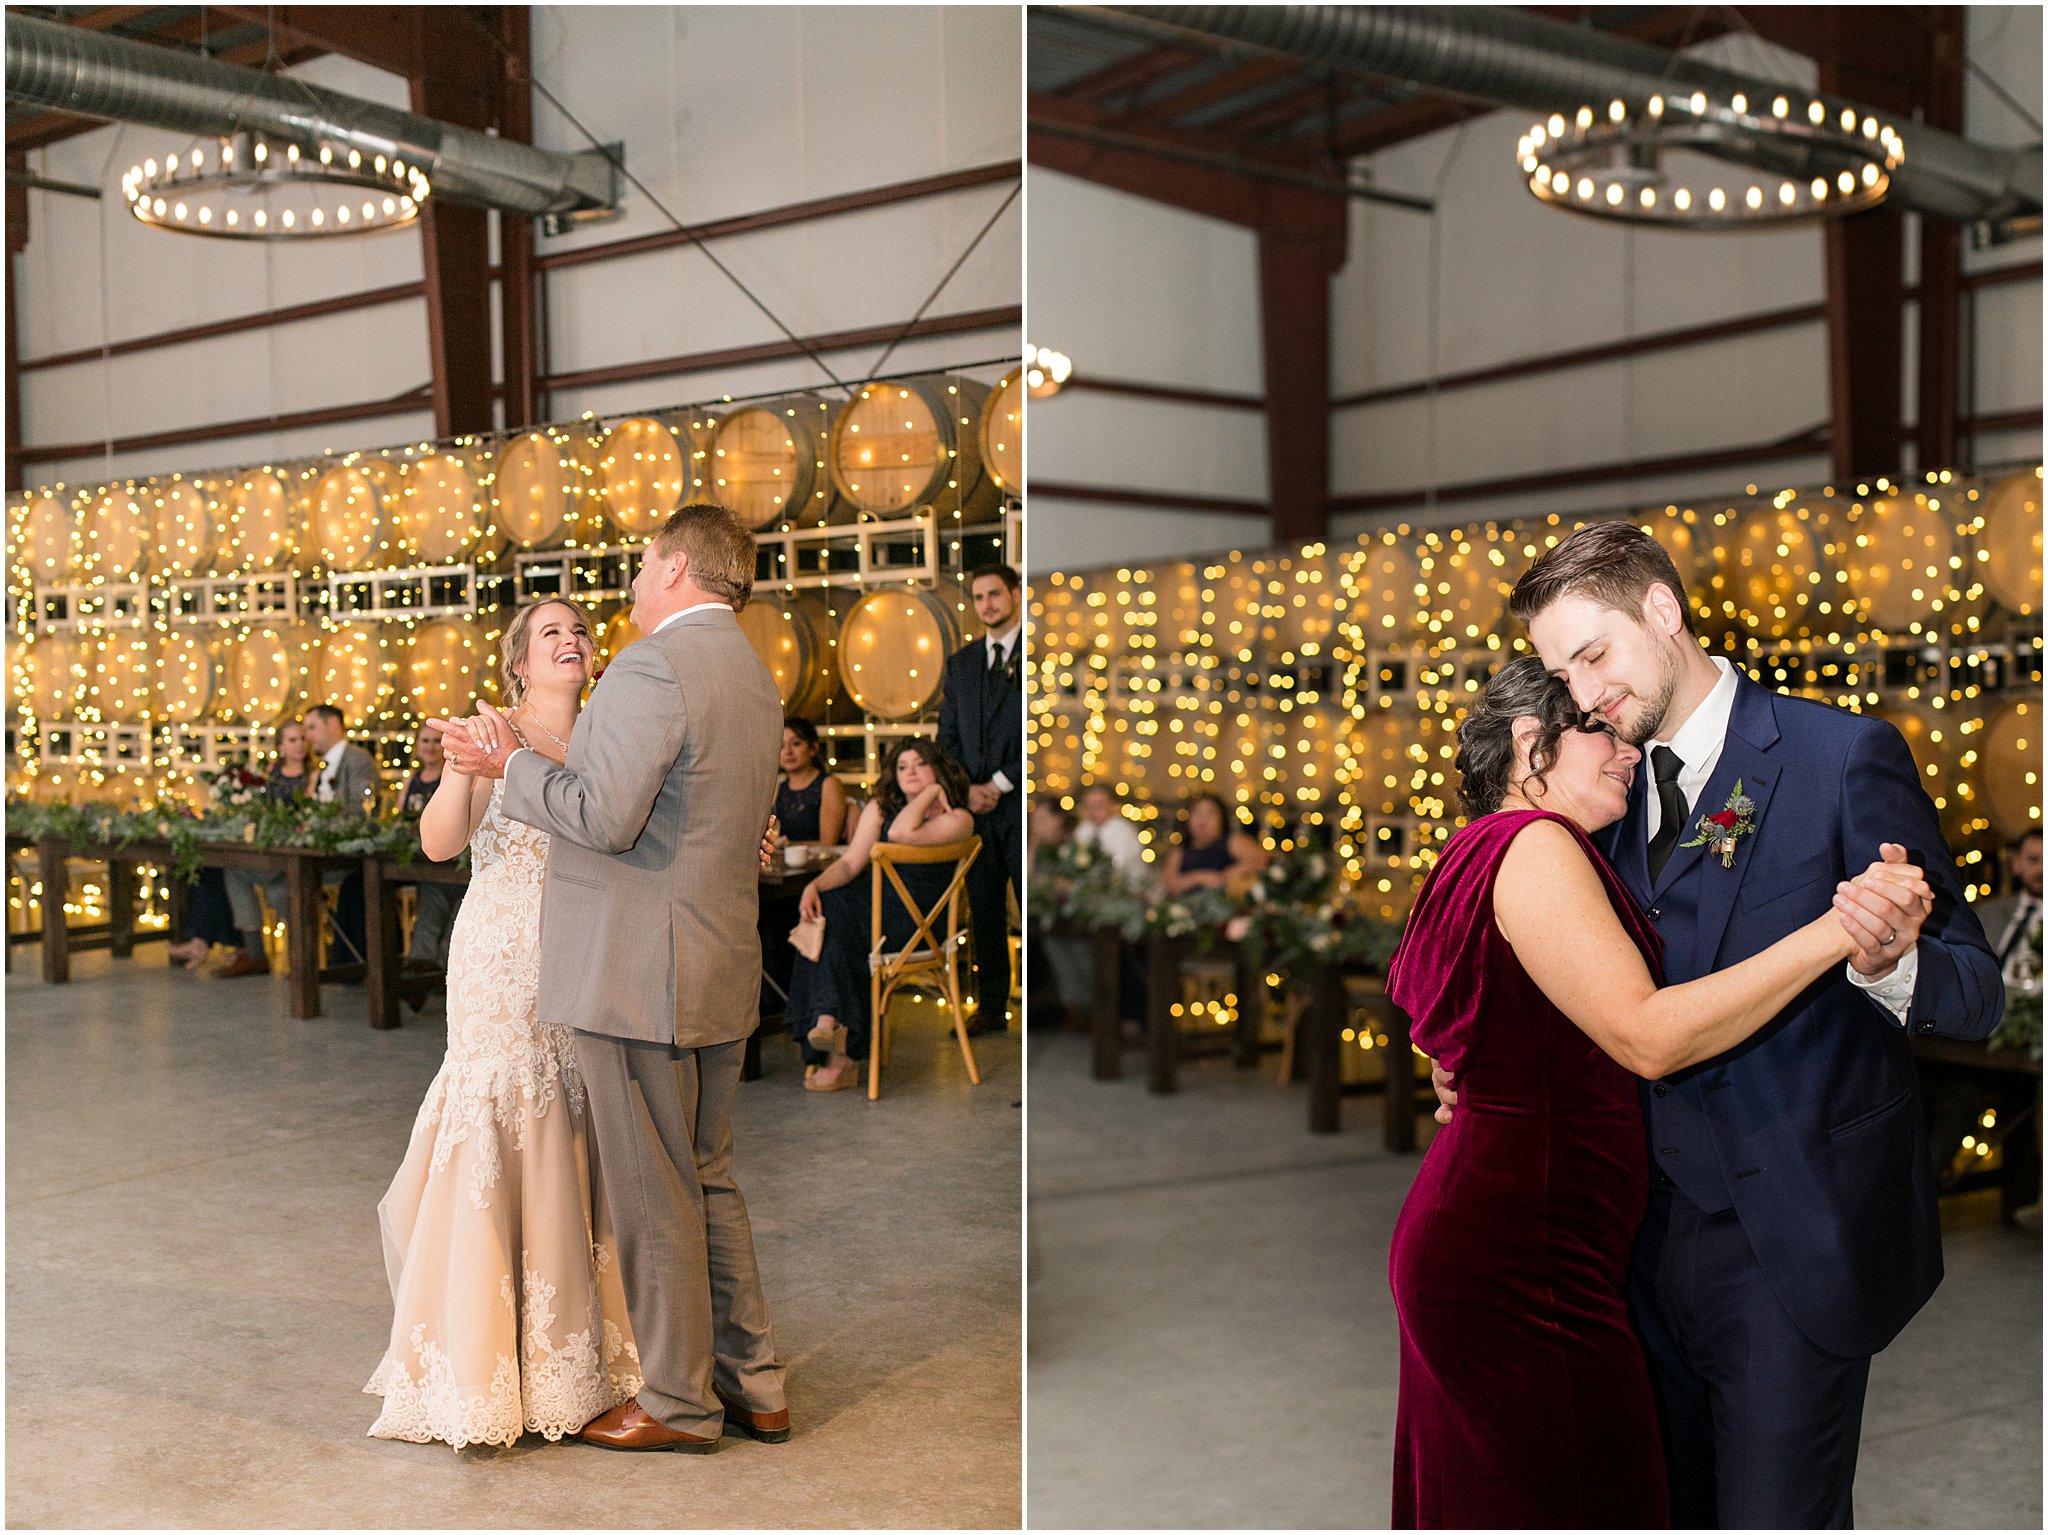 Sycamore Creek Vineyards Wedding - Live Love Leal - Fall Wedding - Bay Area Wedding Photographer - Angela Sue Photography_0133.jpg